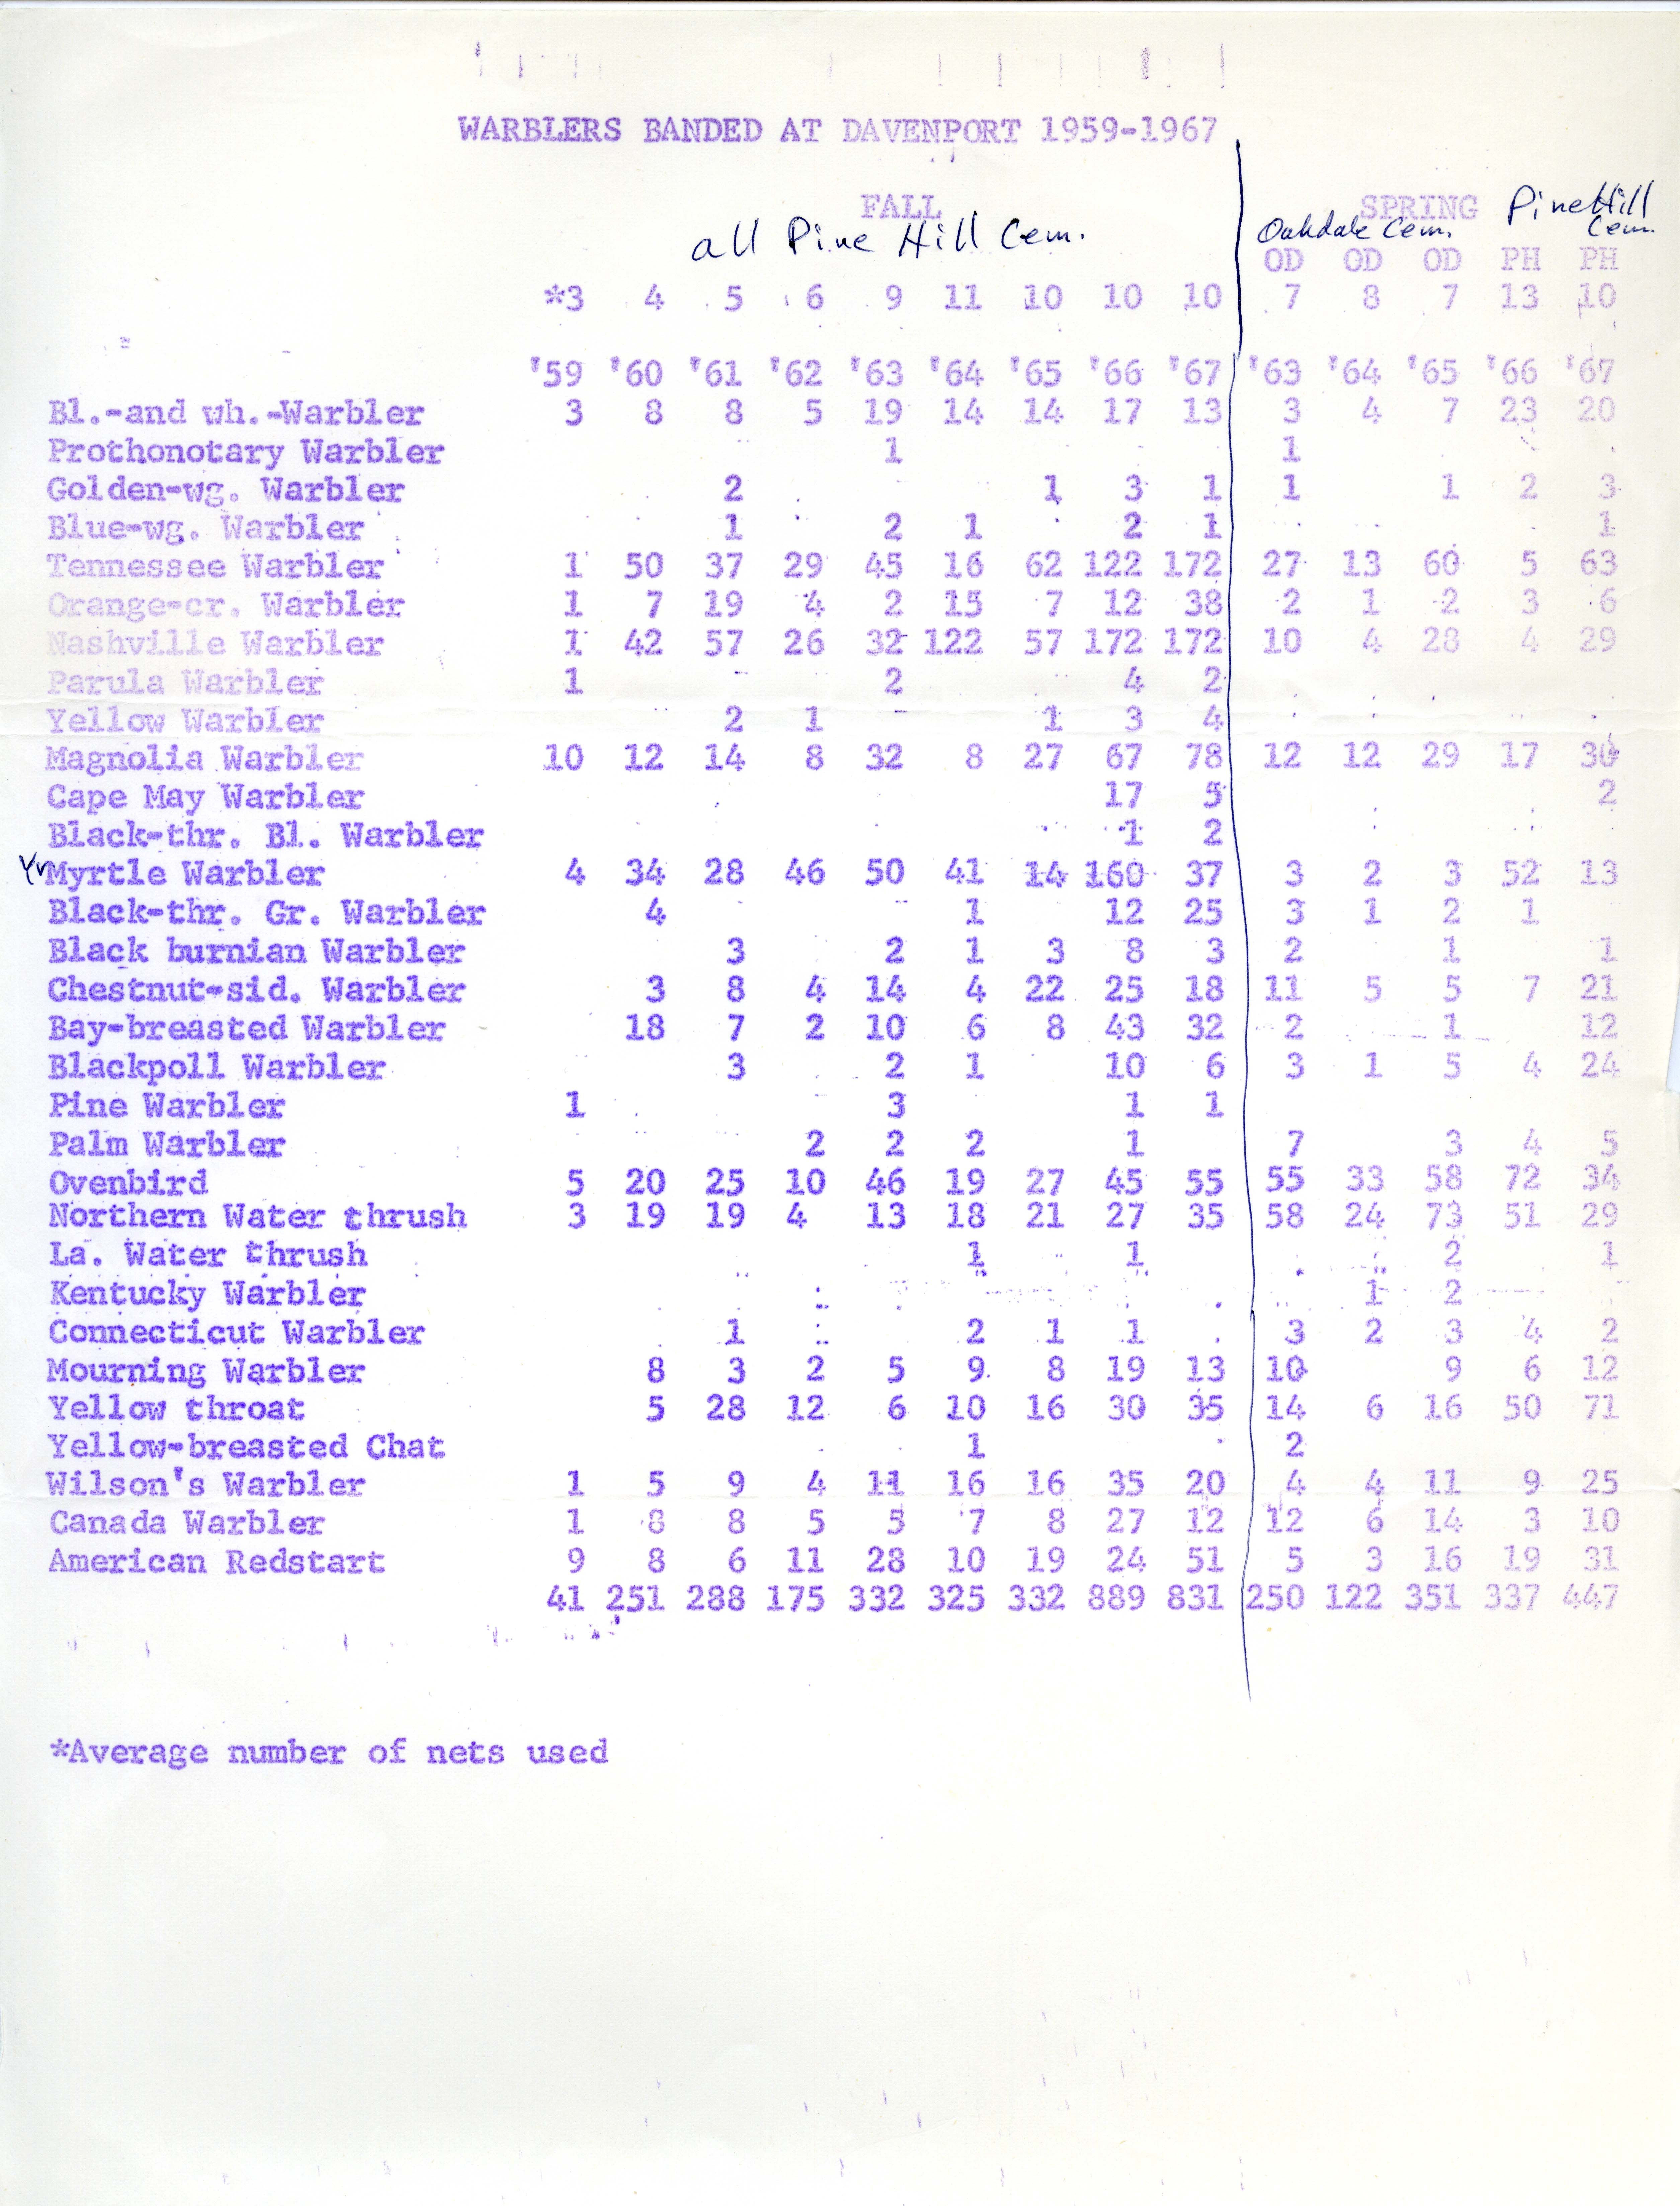 Warblers banded at Davenport 1959-1967